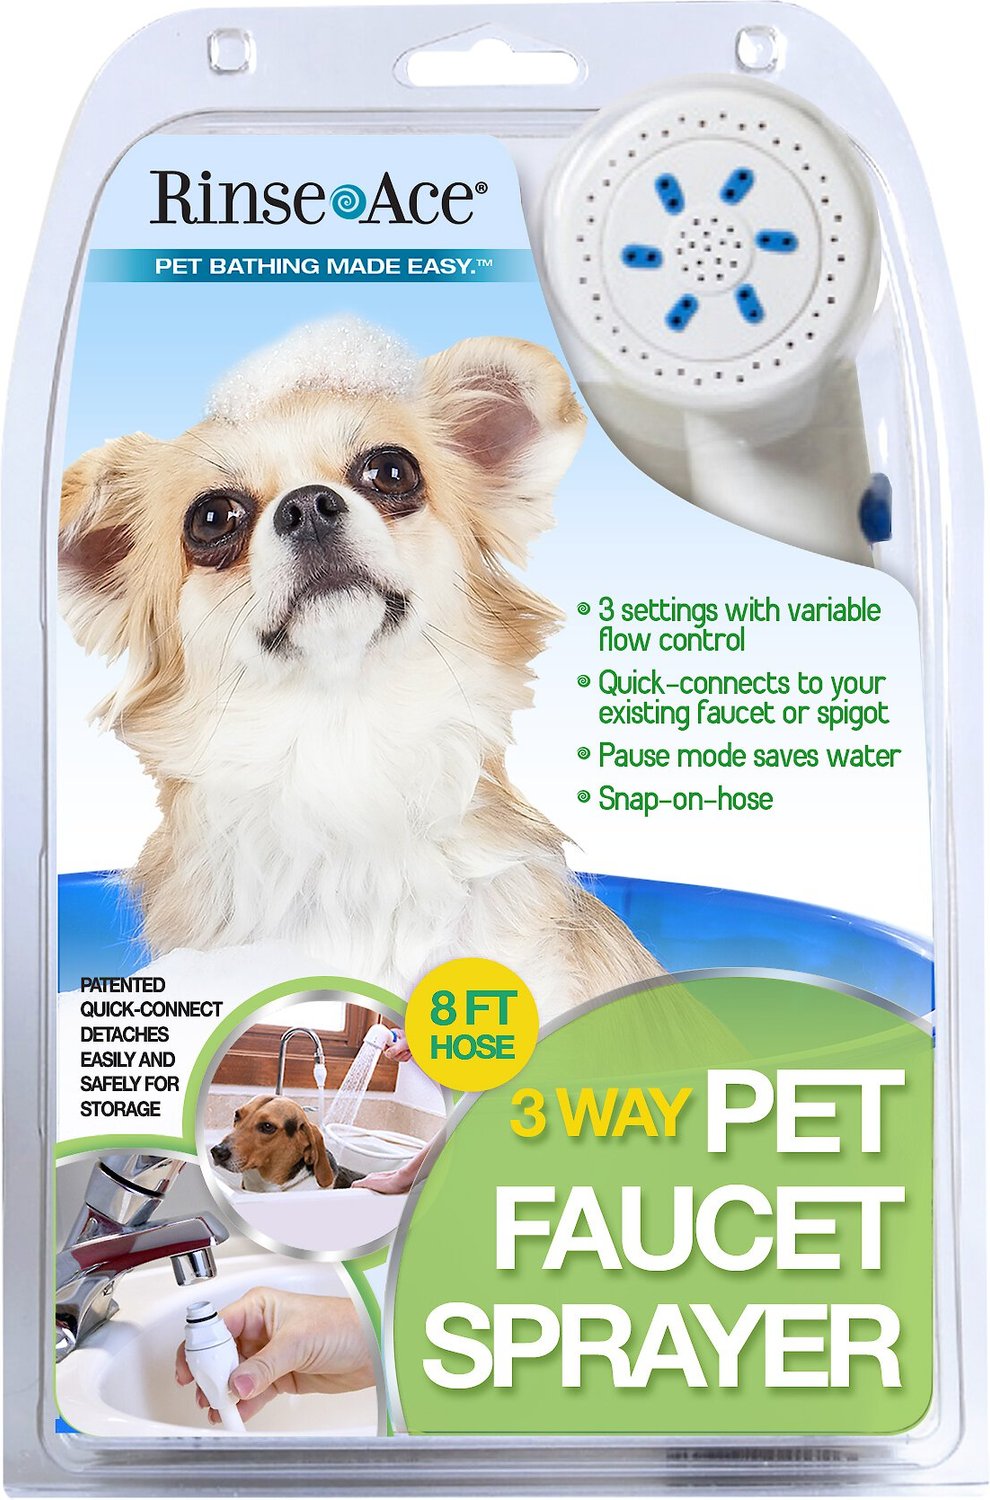 Faucet Sprayer Dog Grooming Tool, Dog Wash Bathtub Attachment